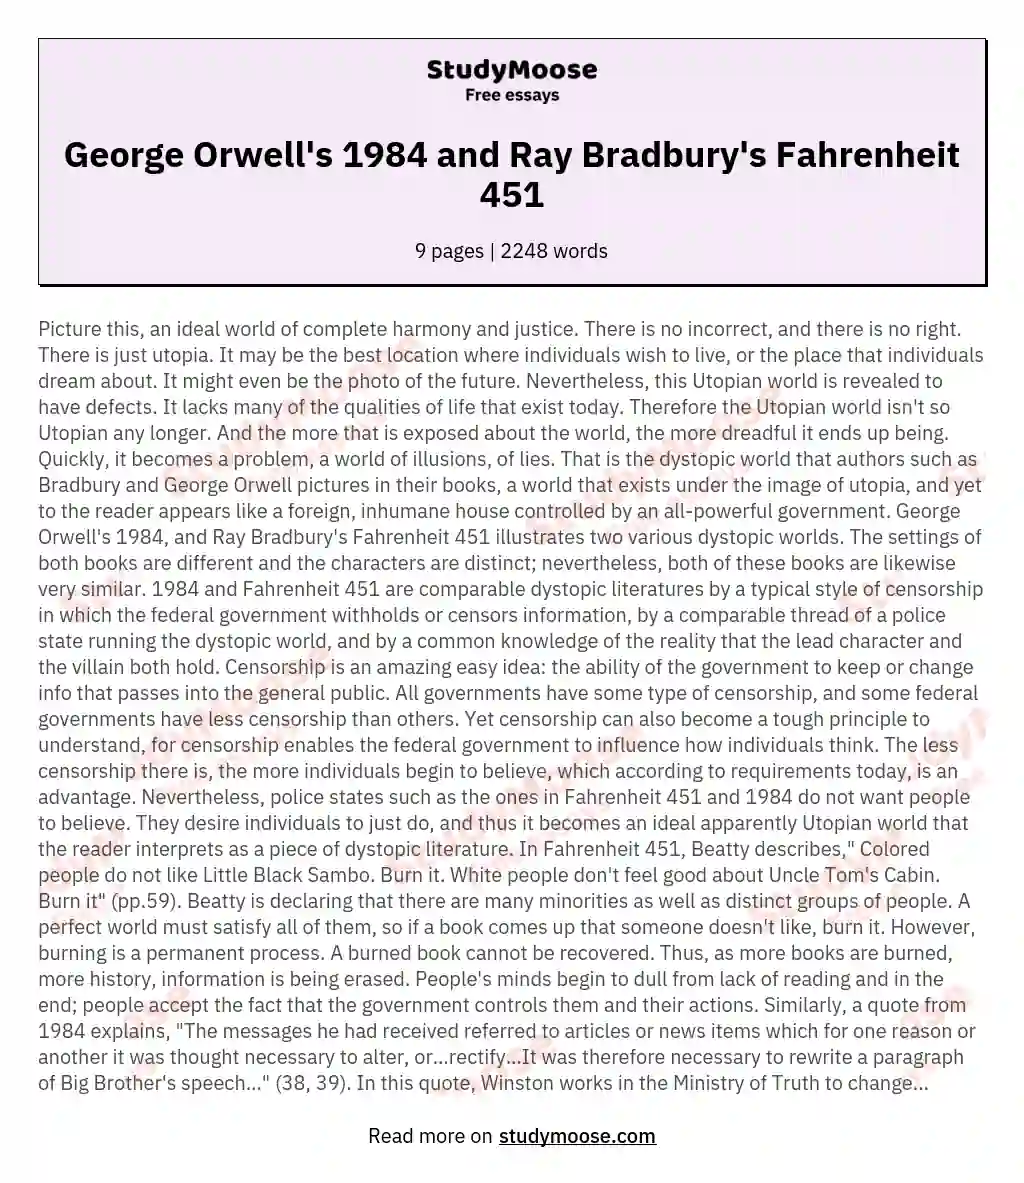 George Orwell's 1984 and Ray Bradbury's Fahrenheit 451